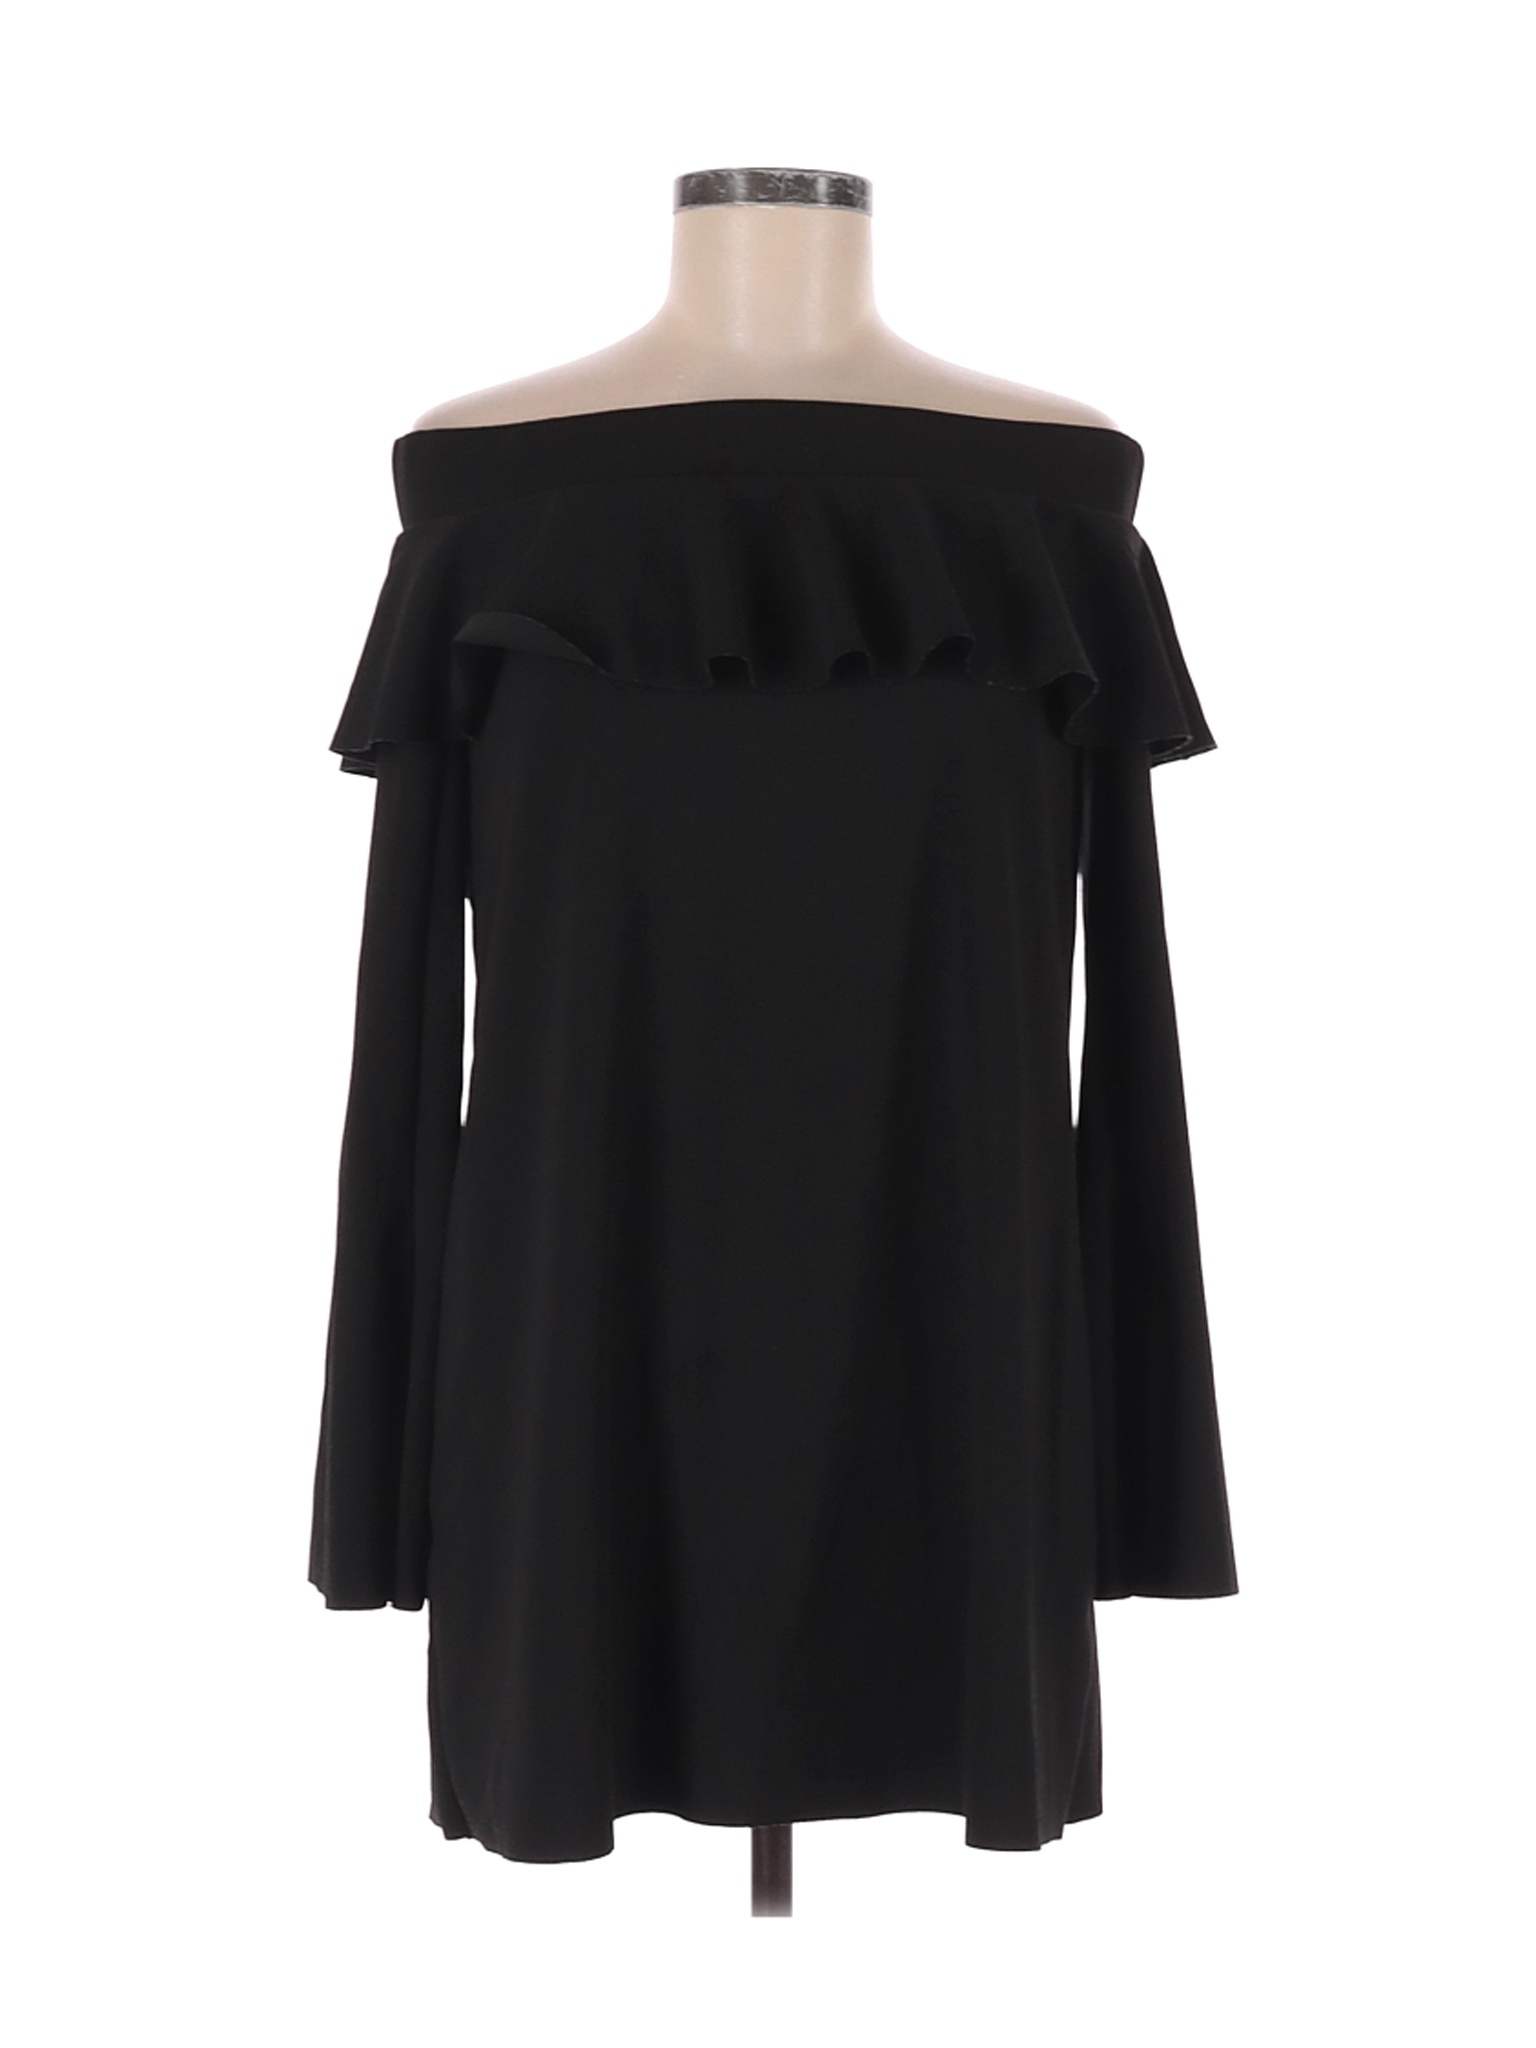 Zara Women Black Long Sleeve Blouse M | eBay